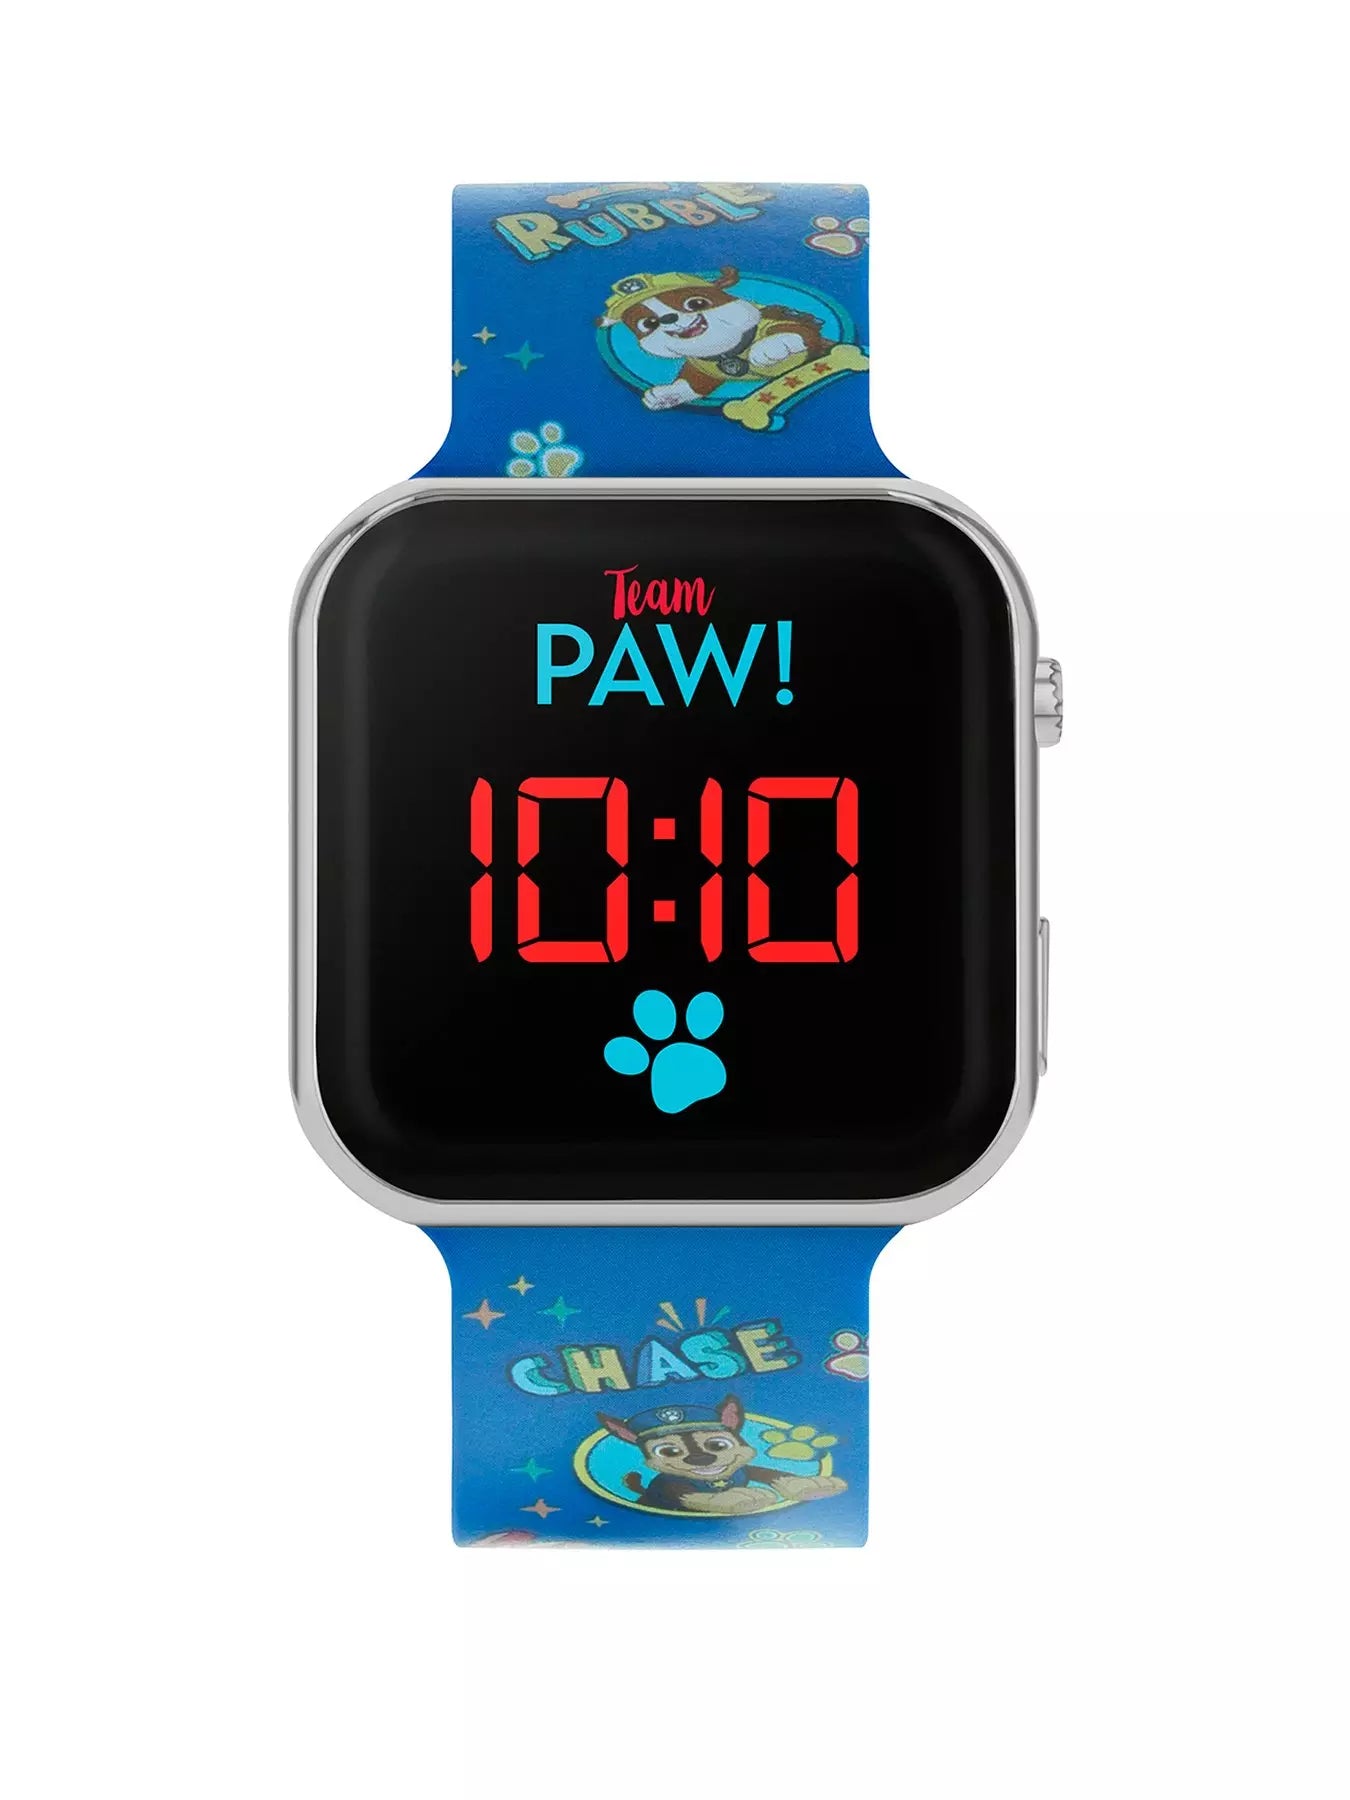 Paw Patrol LED Watch Chase